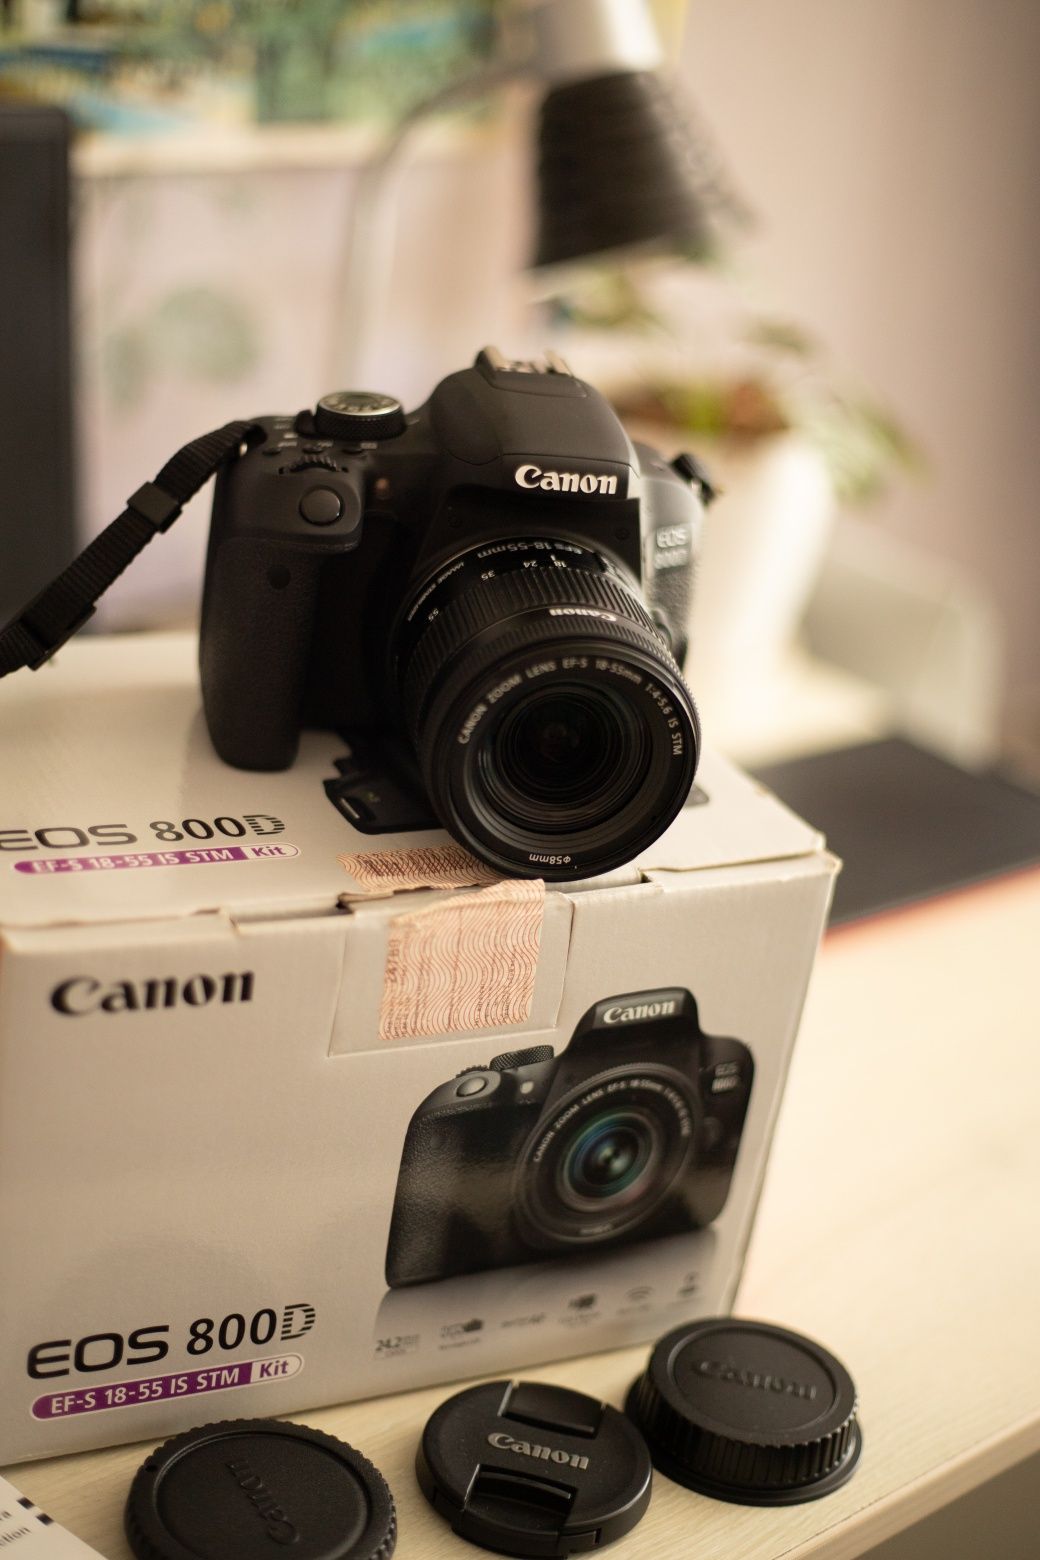 Canon 800d + kit 18-55 mm